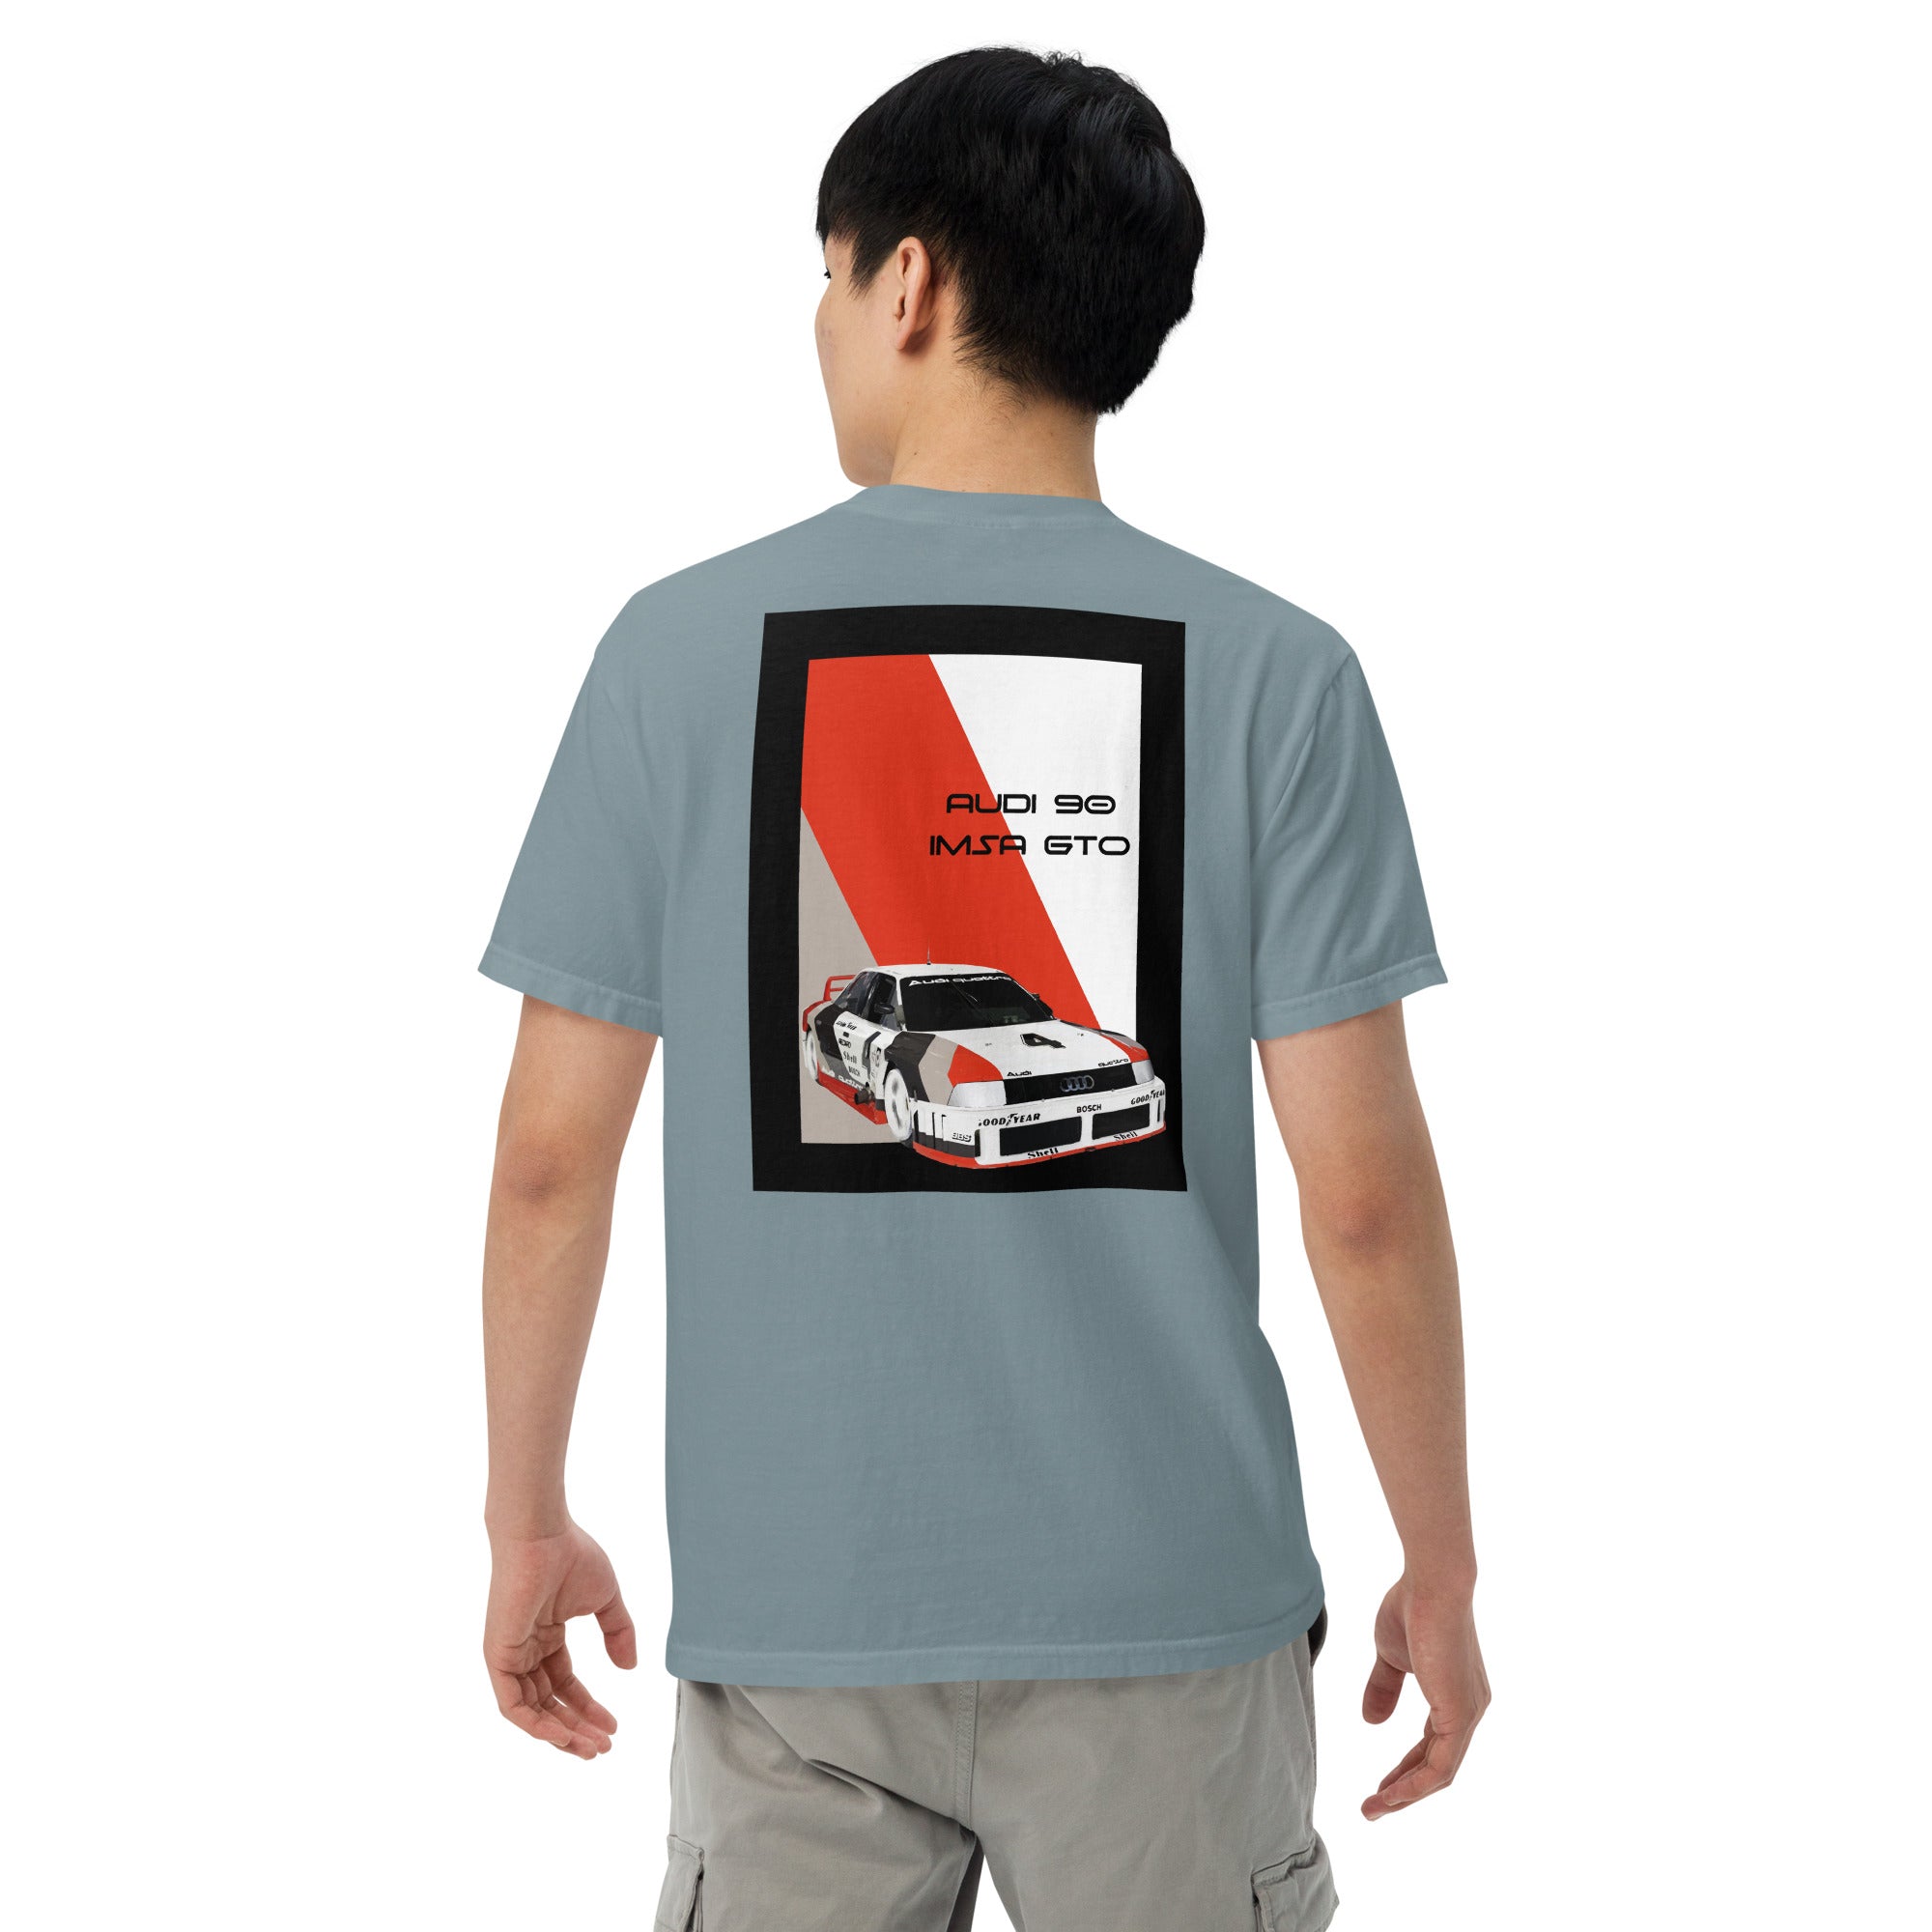 90: Audi 90 quattro GTO imsa race car t-shirt grey back full t-shirt